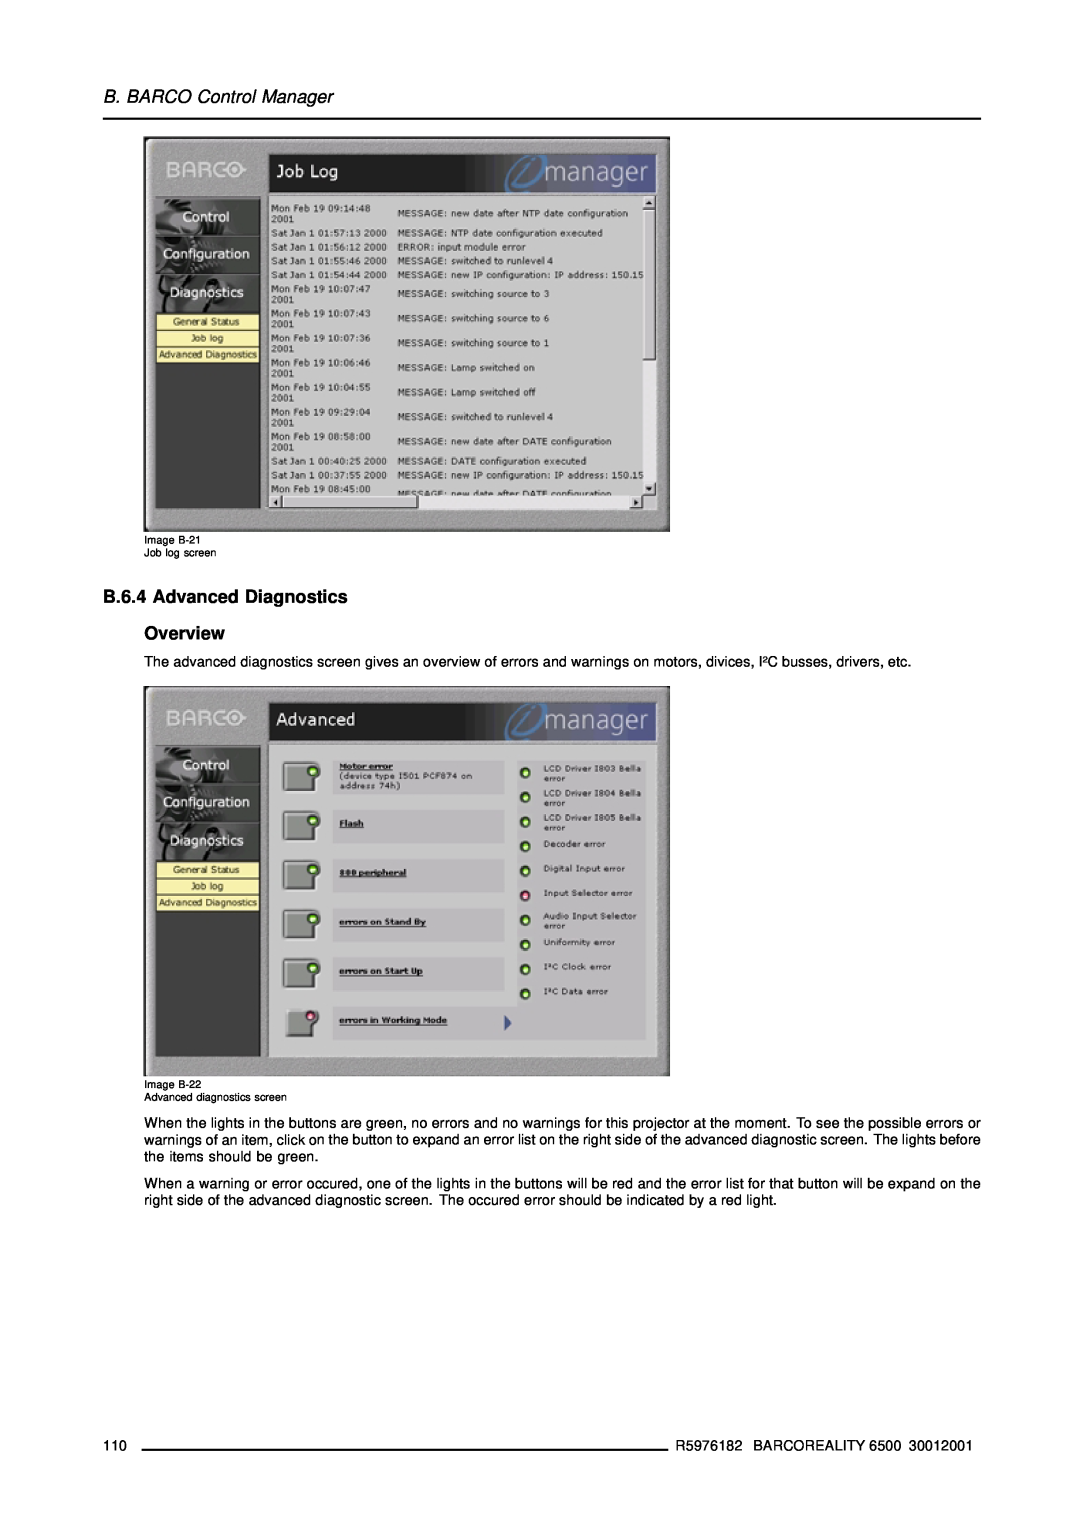 Barco R9001960 owner manual B.6.4 Advanced Diagnostics Overview, B. BARCO Control Manager, Image B-21 Job log screen 